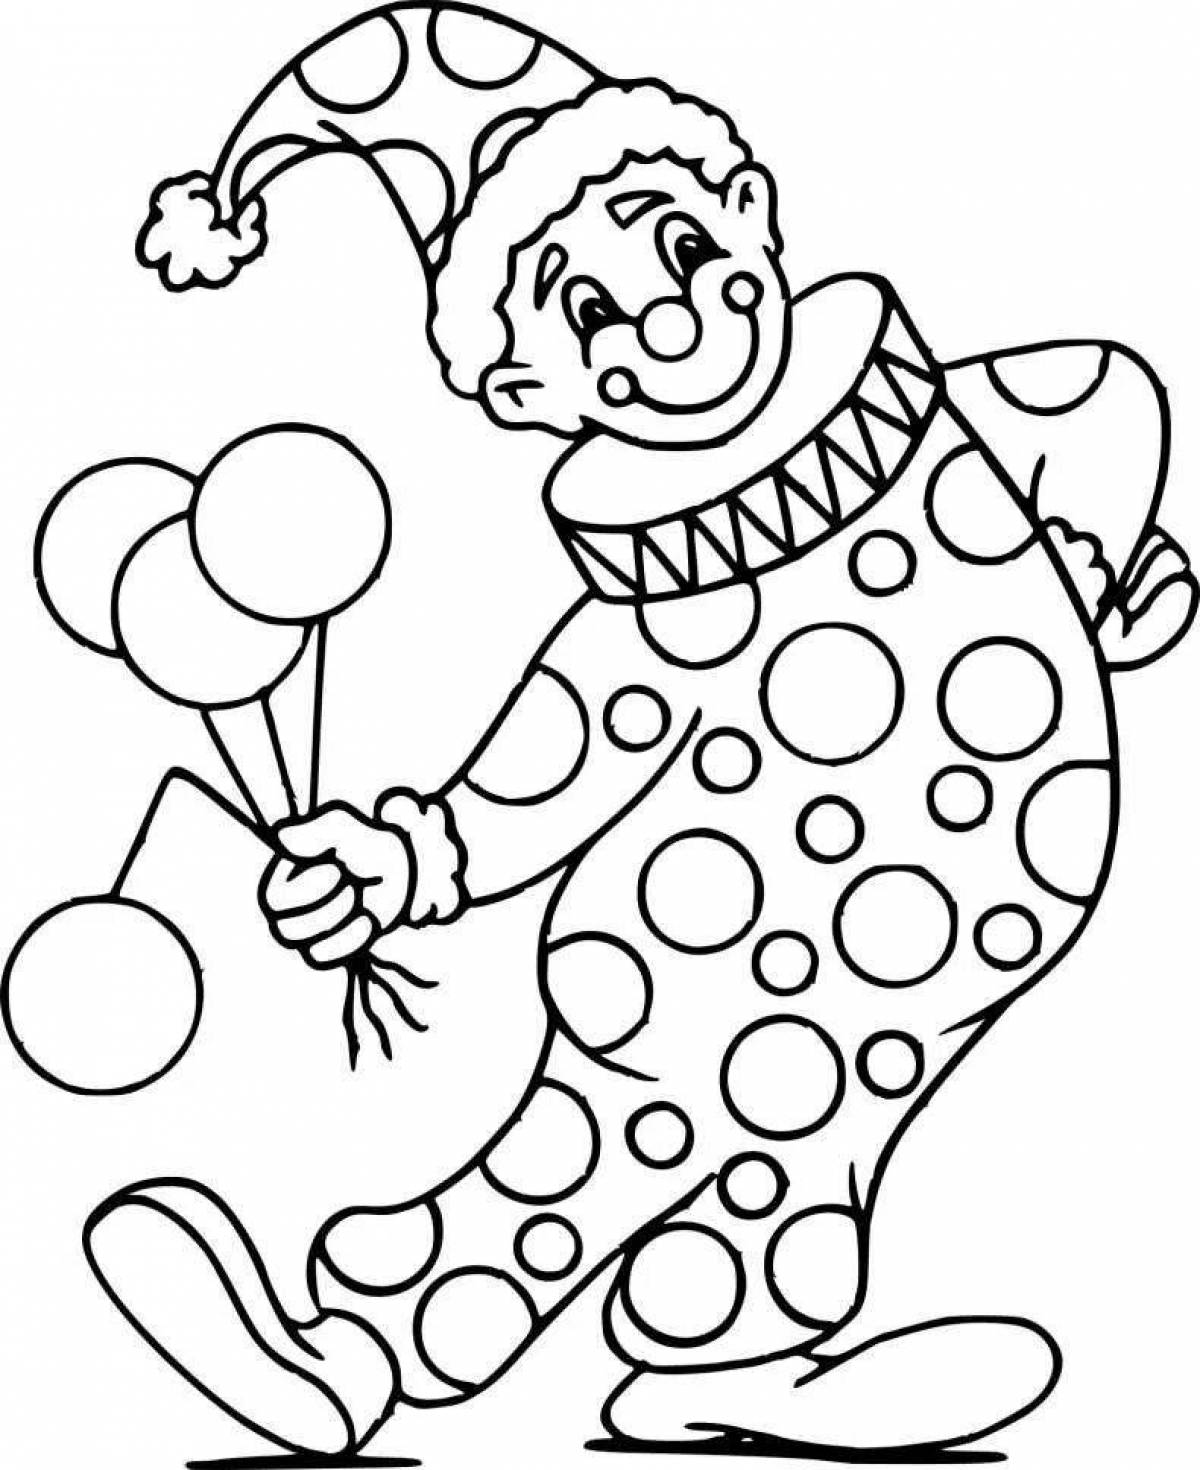 Crazy funny clown coloring book